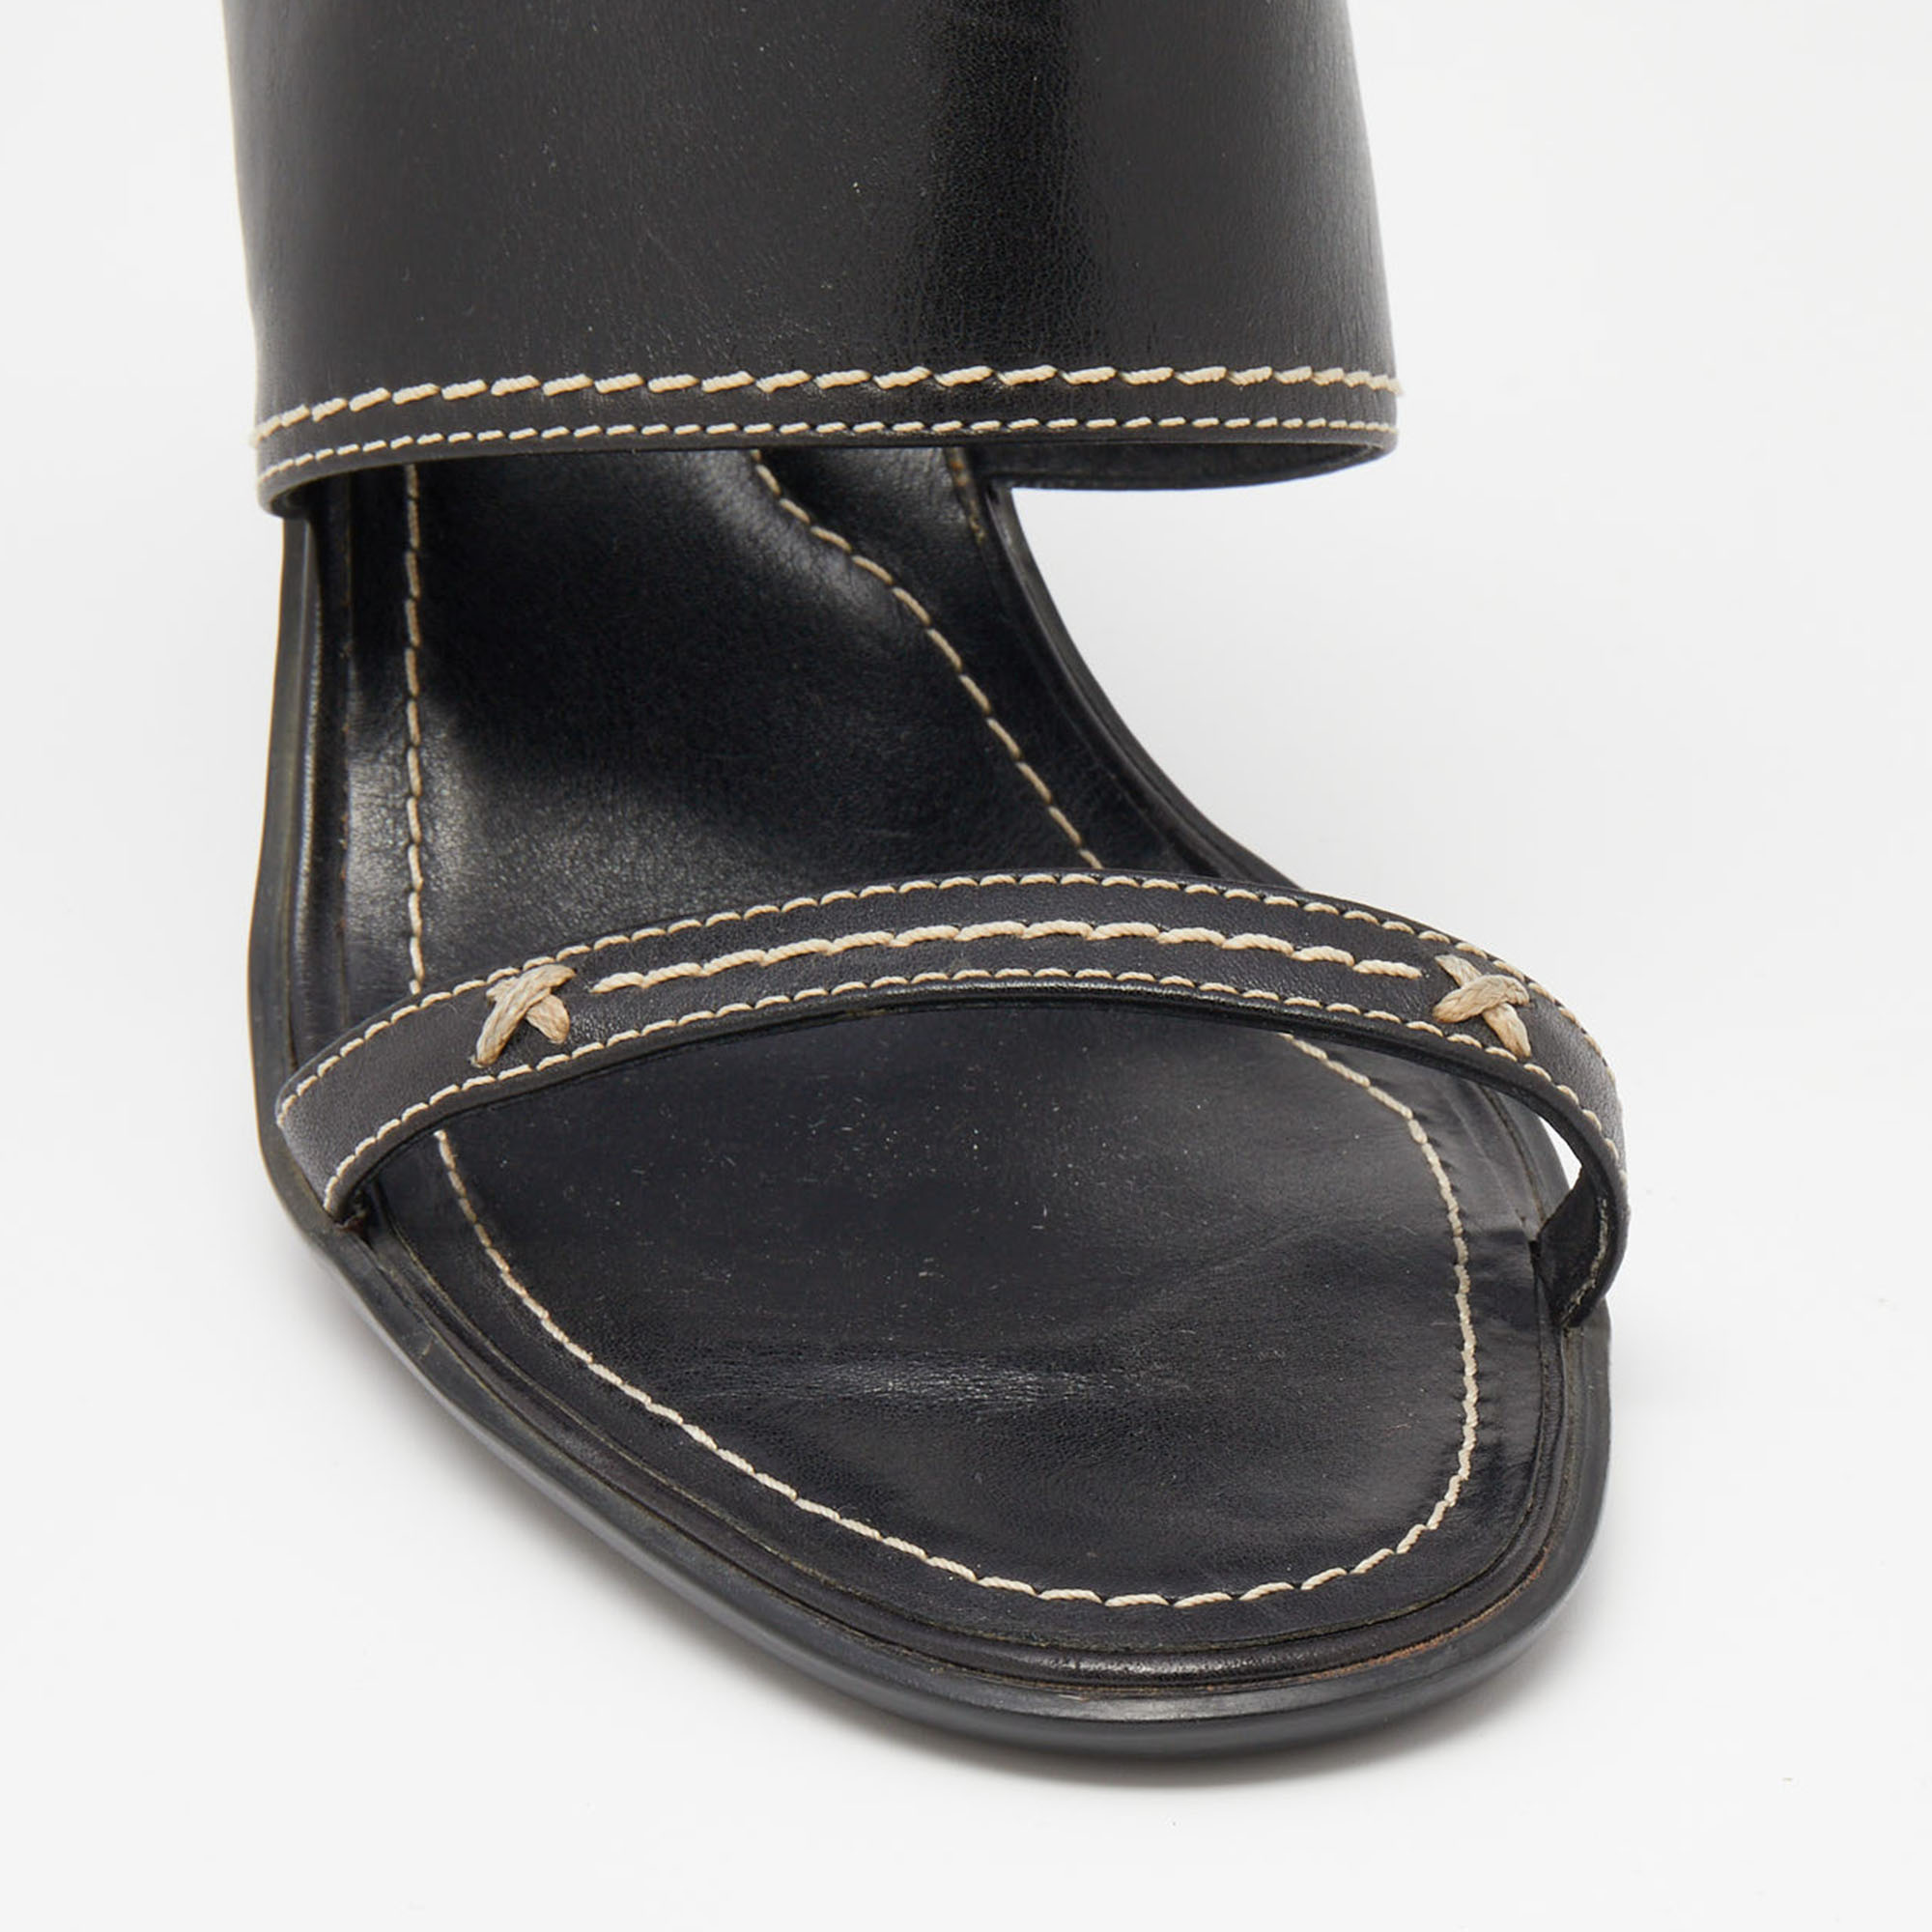 Tod's Black Leather Slide Sandals Size 38